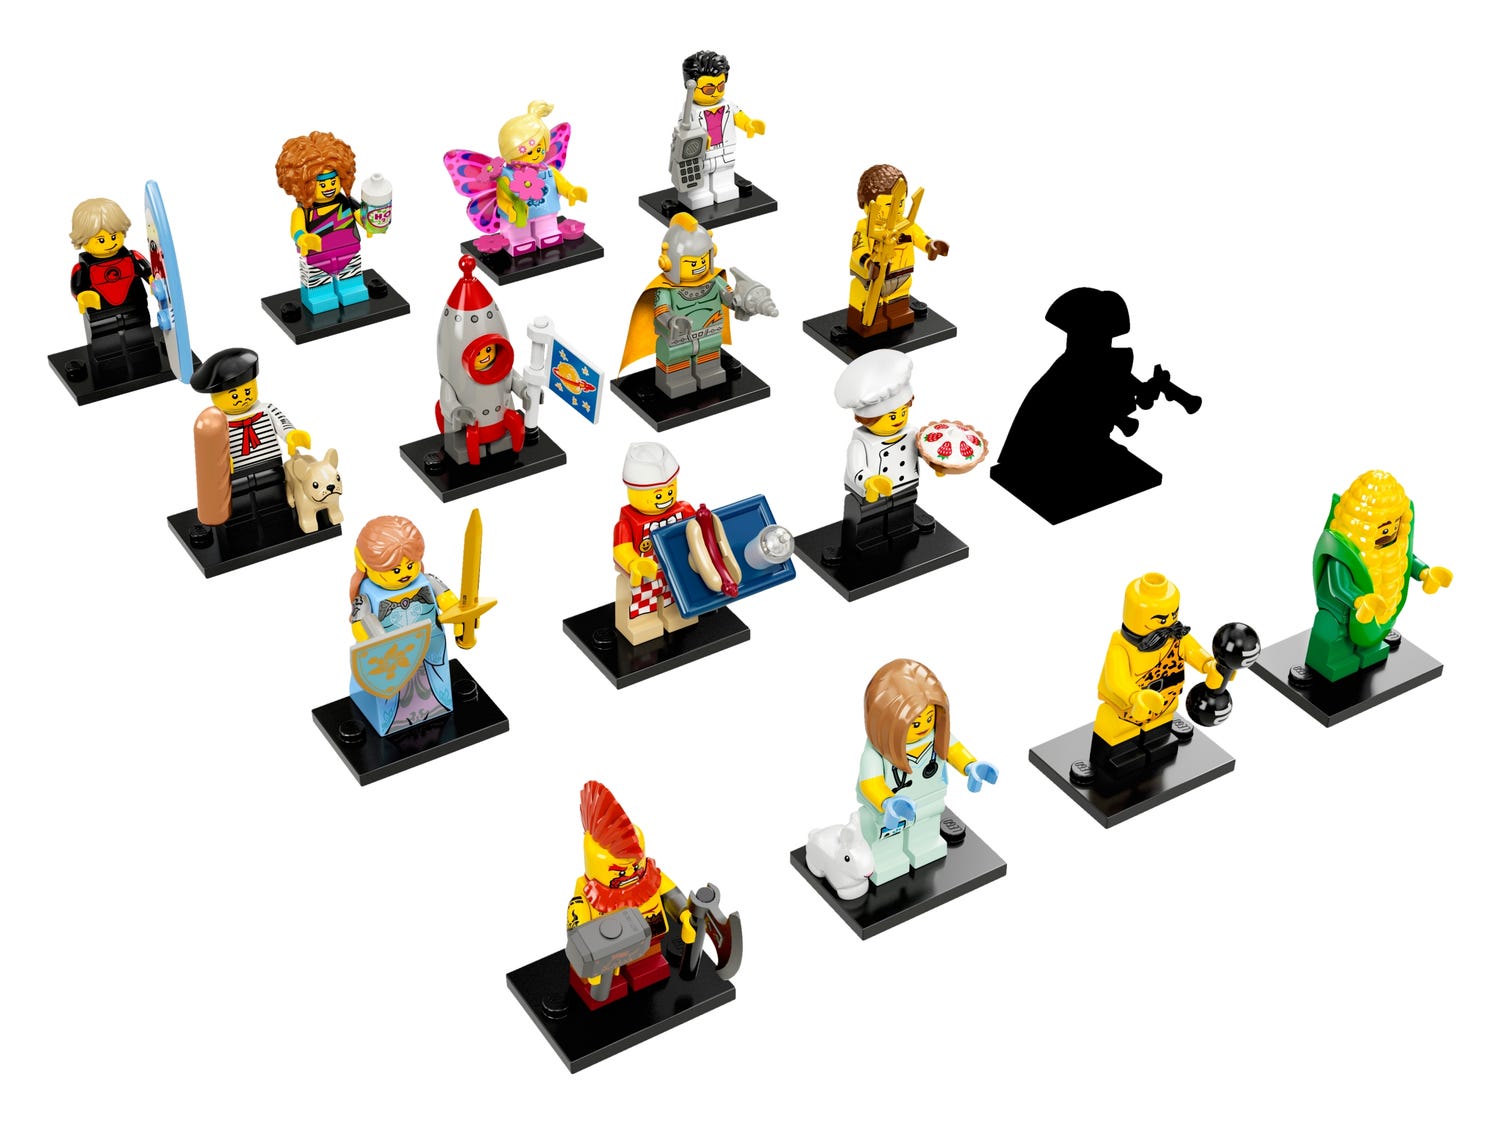 Lego Minifigures Series 17 71018 - Albagame